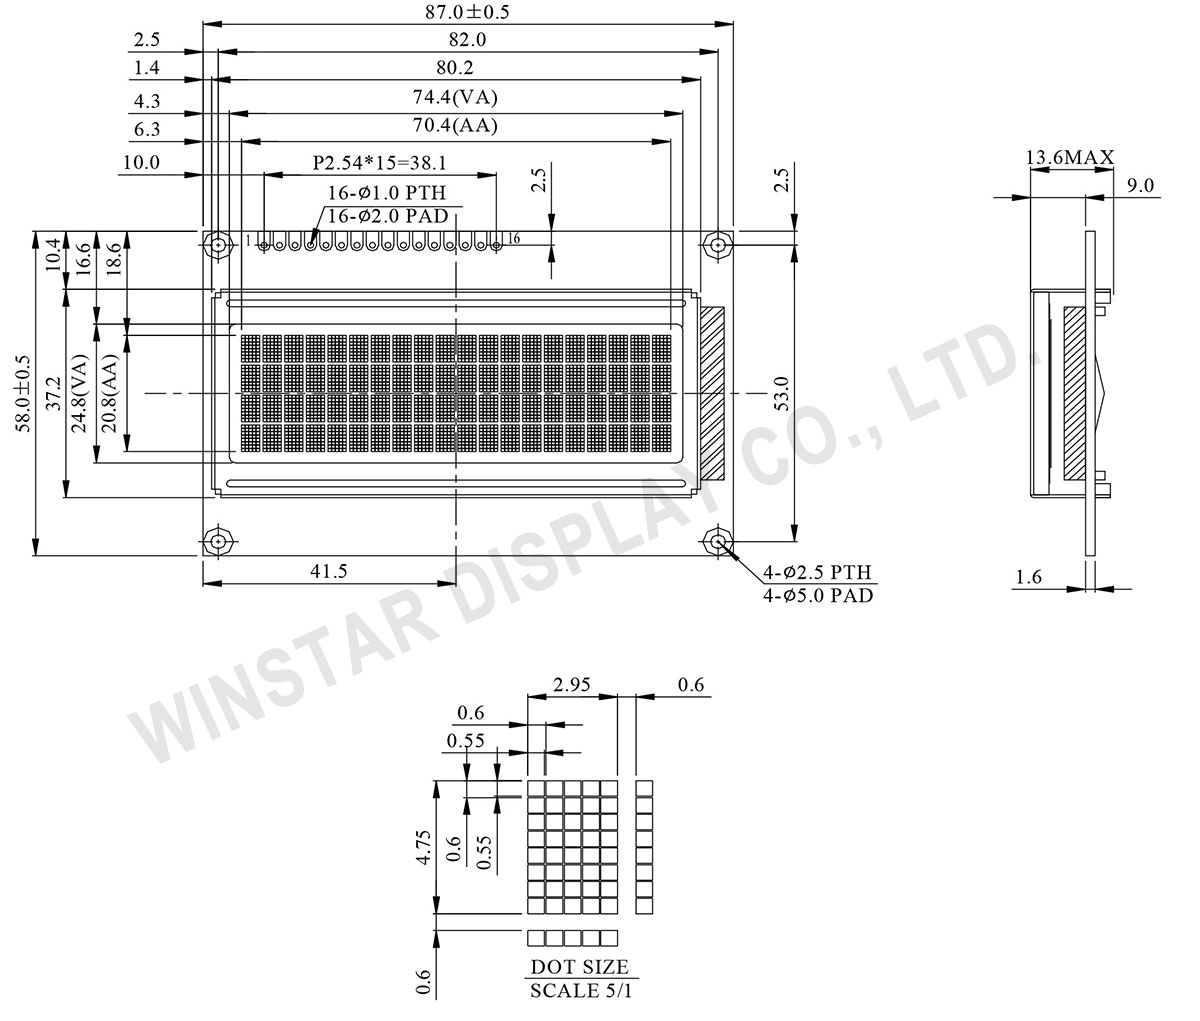 Winstar WH2004G - 20x4 Character LCD Display, 20x4 LCD Display, 2004 LCD Display